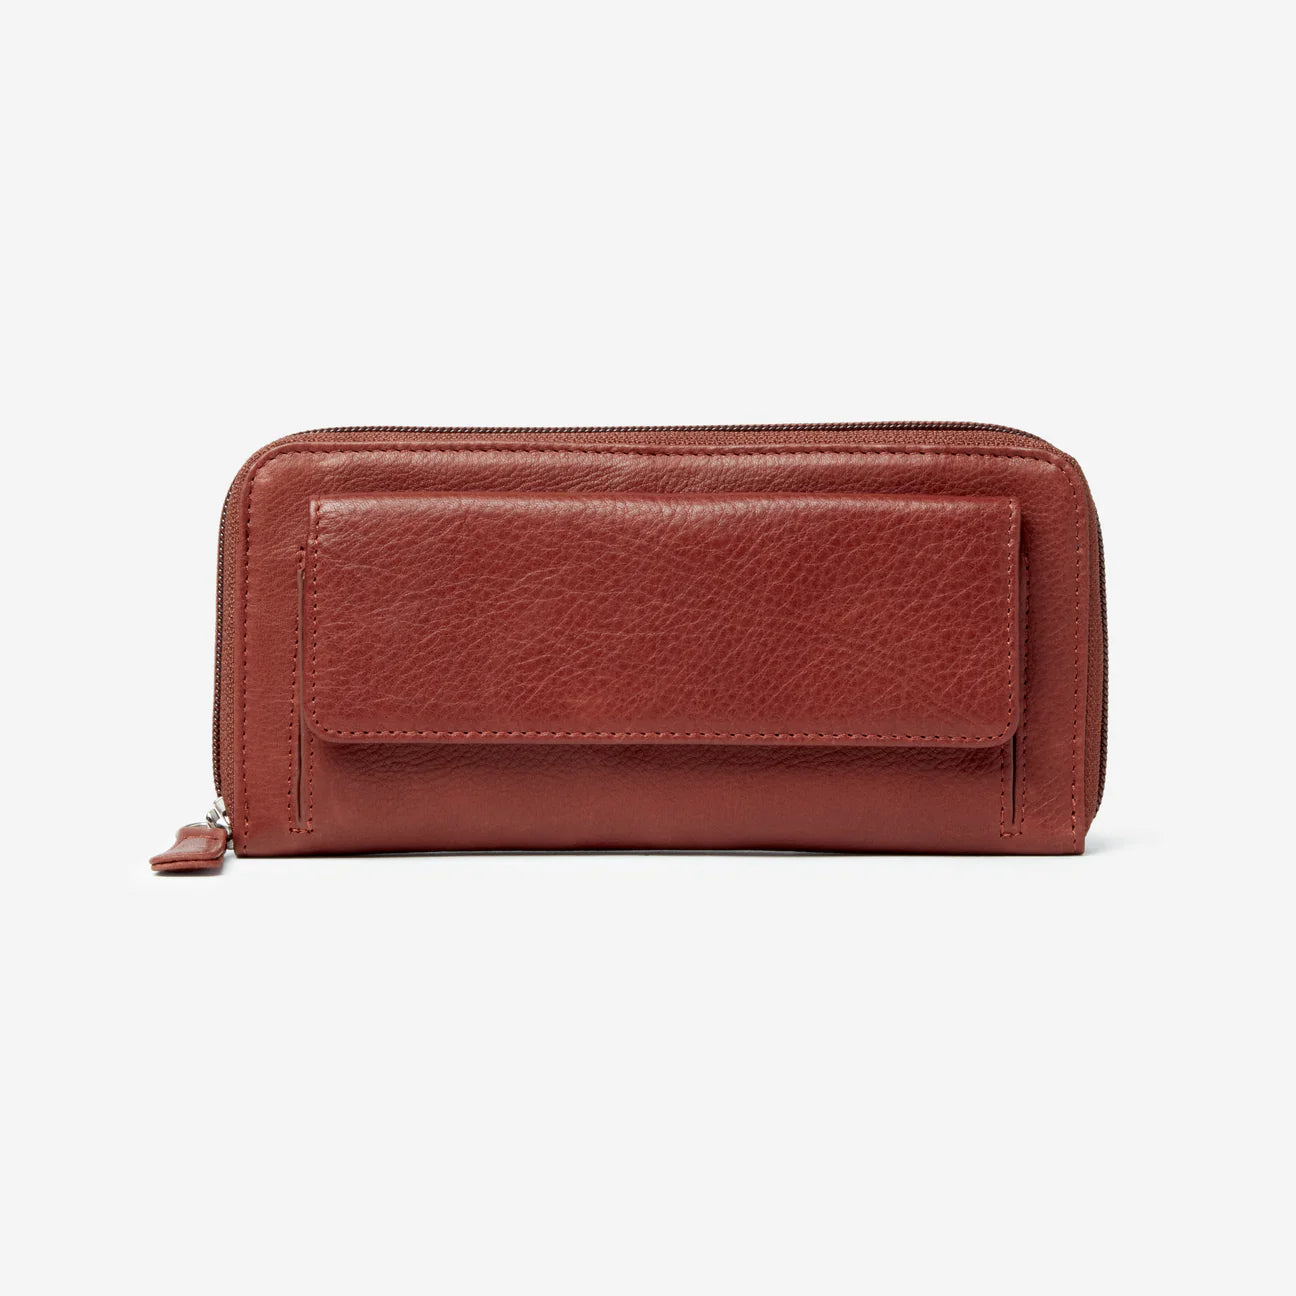 Osgoode Marley Leather RFID ZIP AROUND Wallet